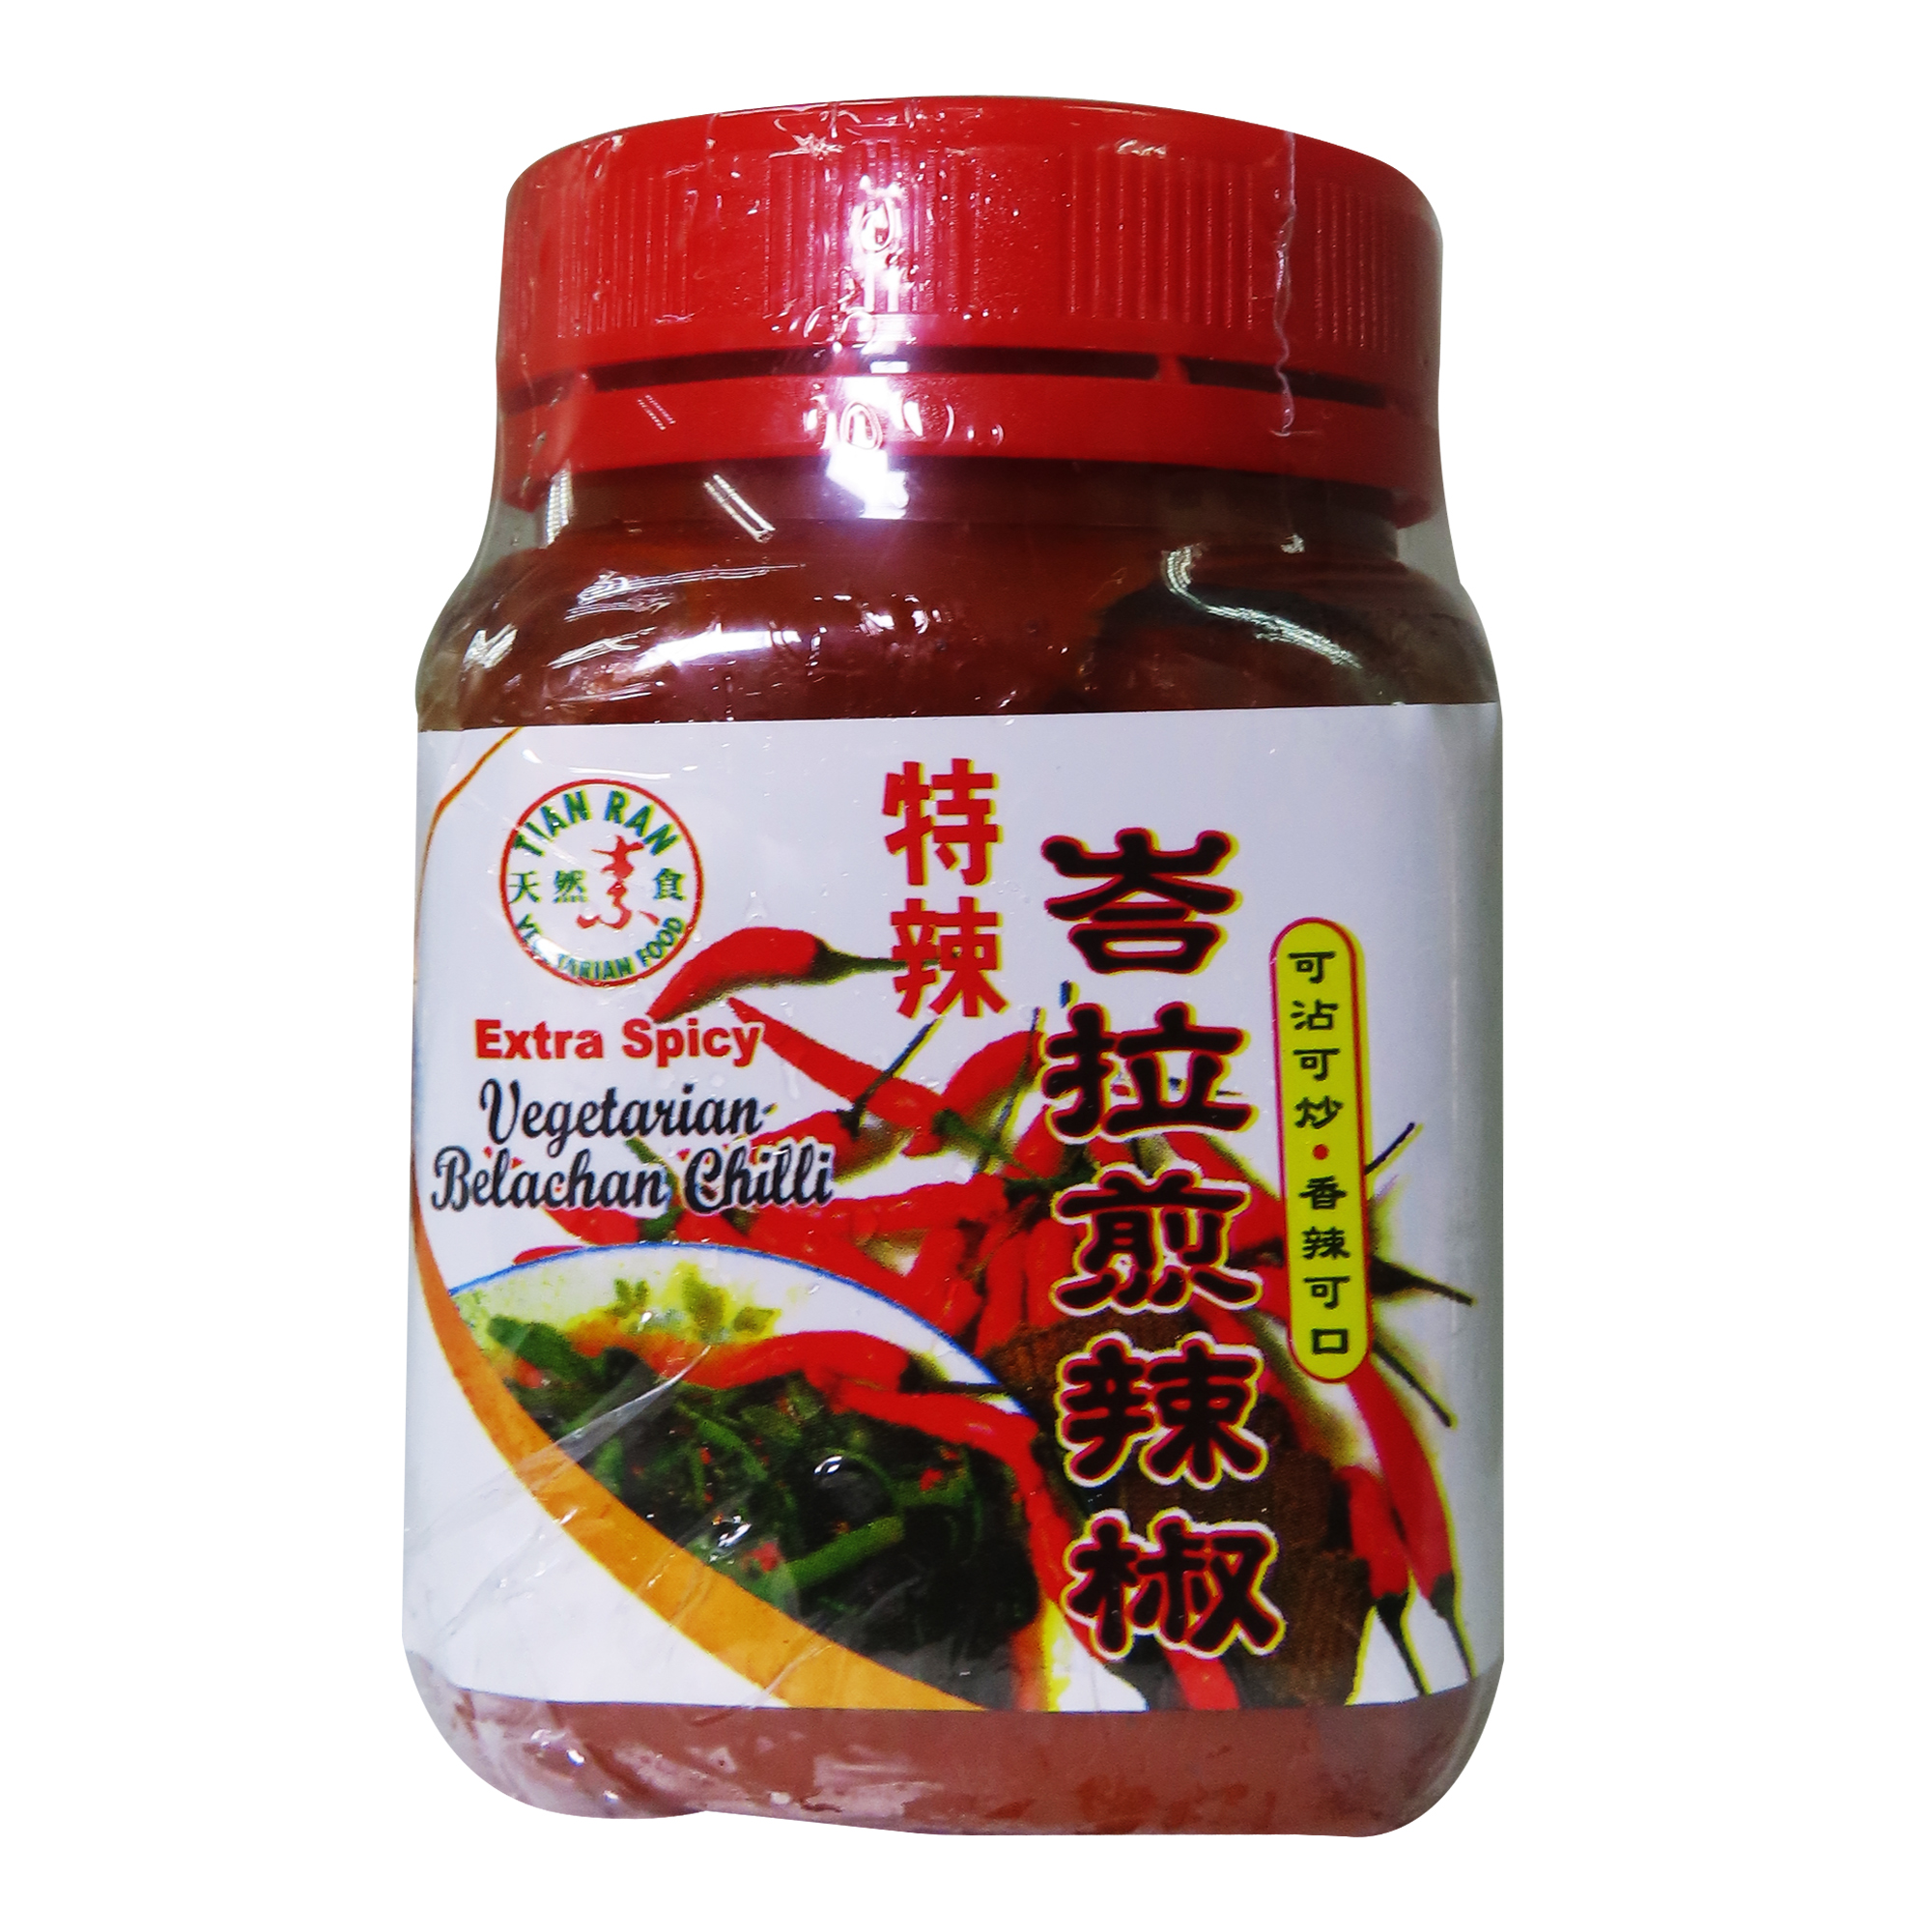 Image Extra Spicy Vegetarian Balachan Chili 天然-特辣峇拉煎辣椒 180grams